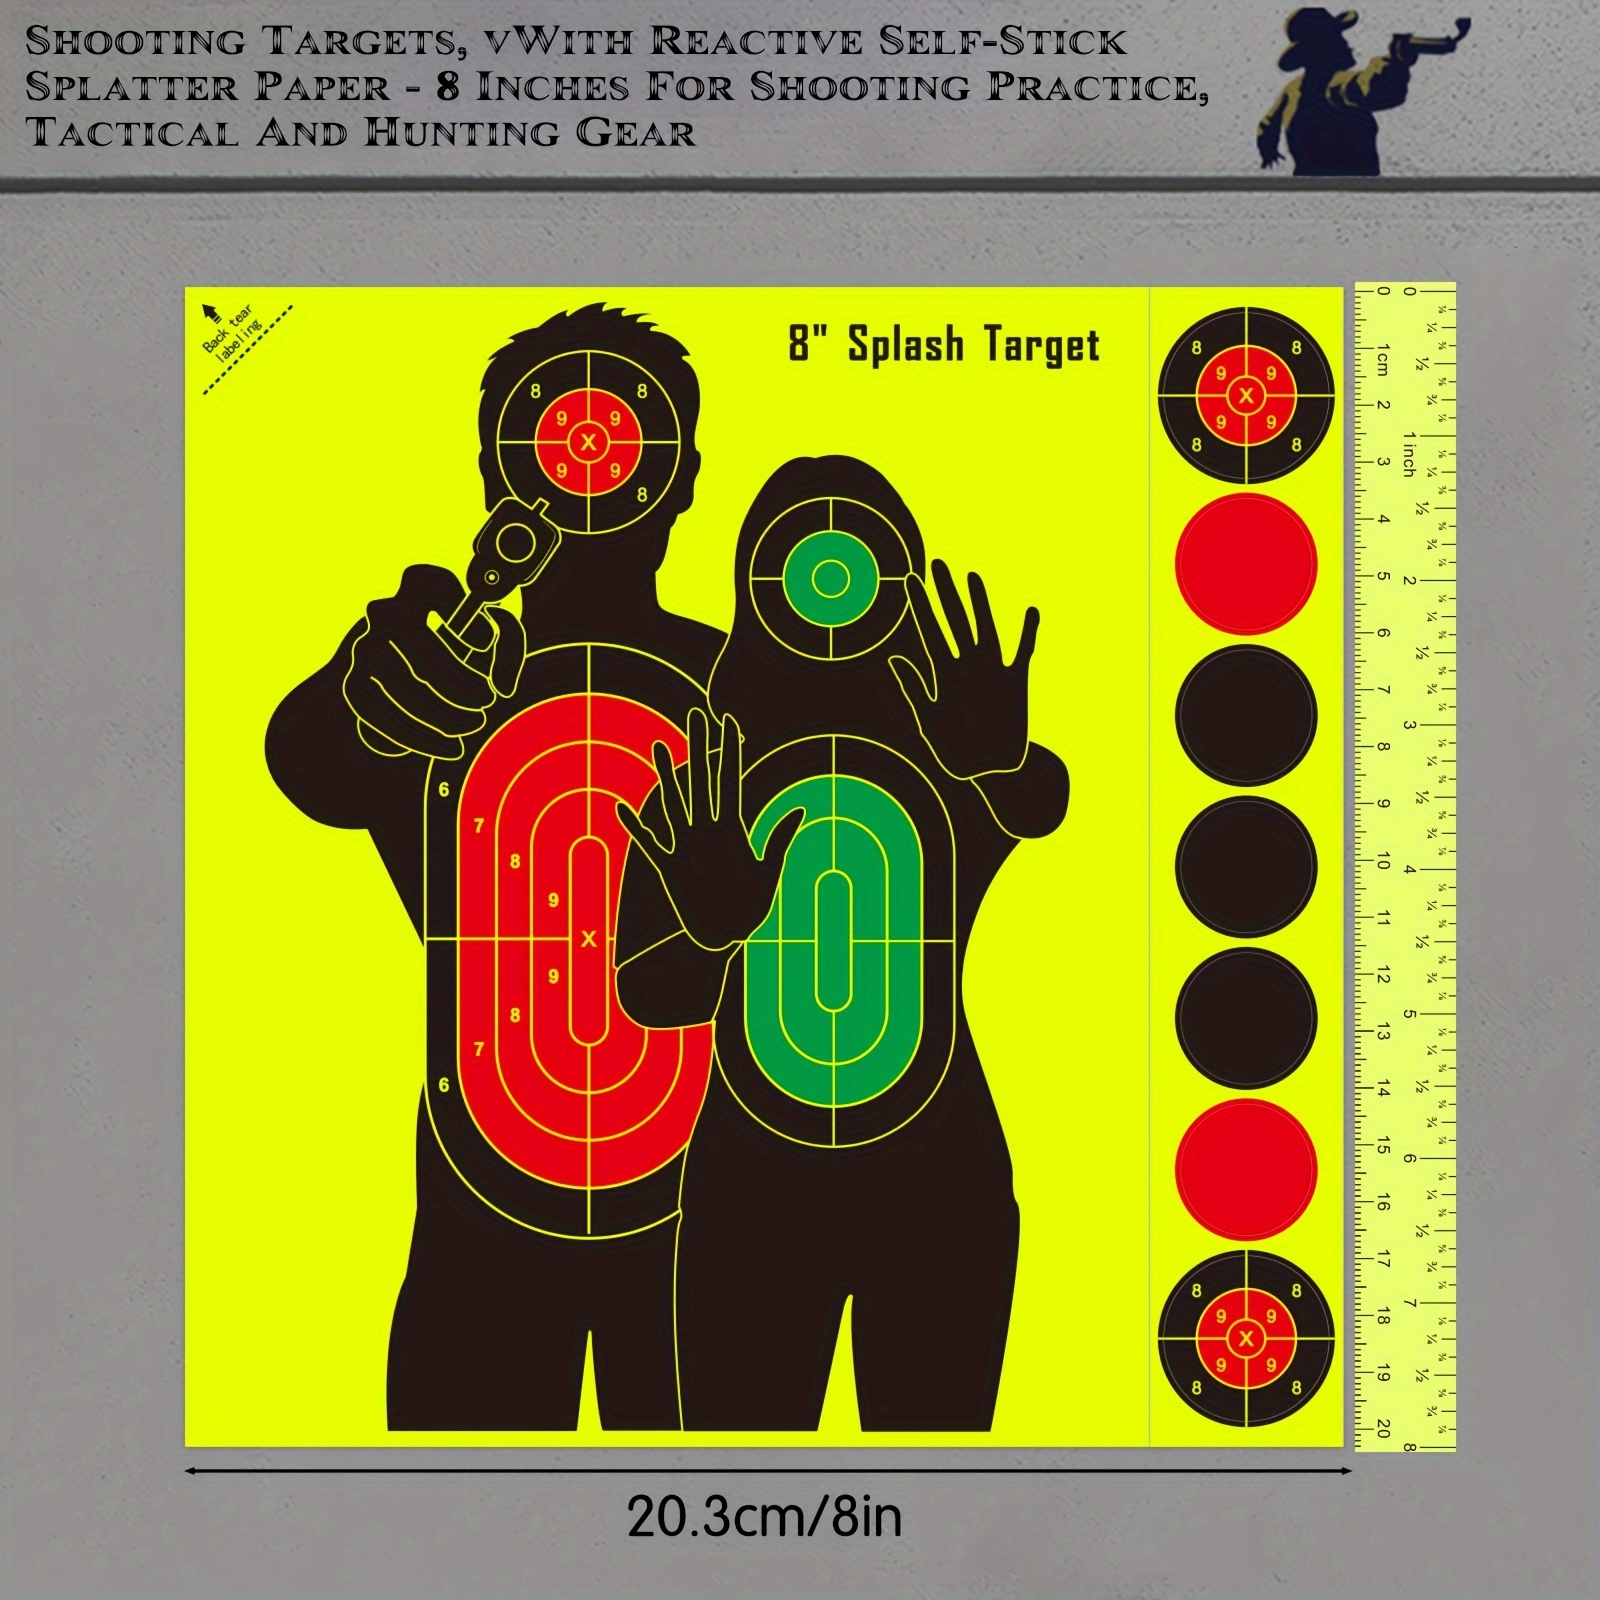 50 Meter Rifle Target, Shape: Square, 25.4cm X 25.4 Cm